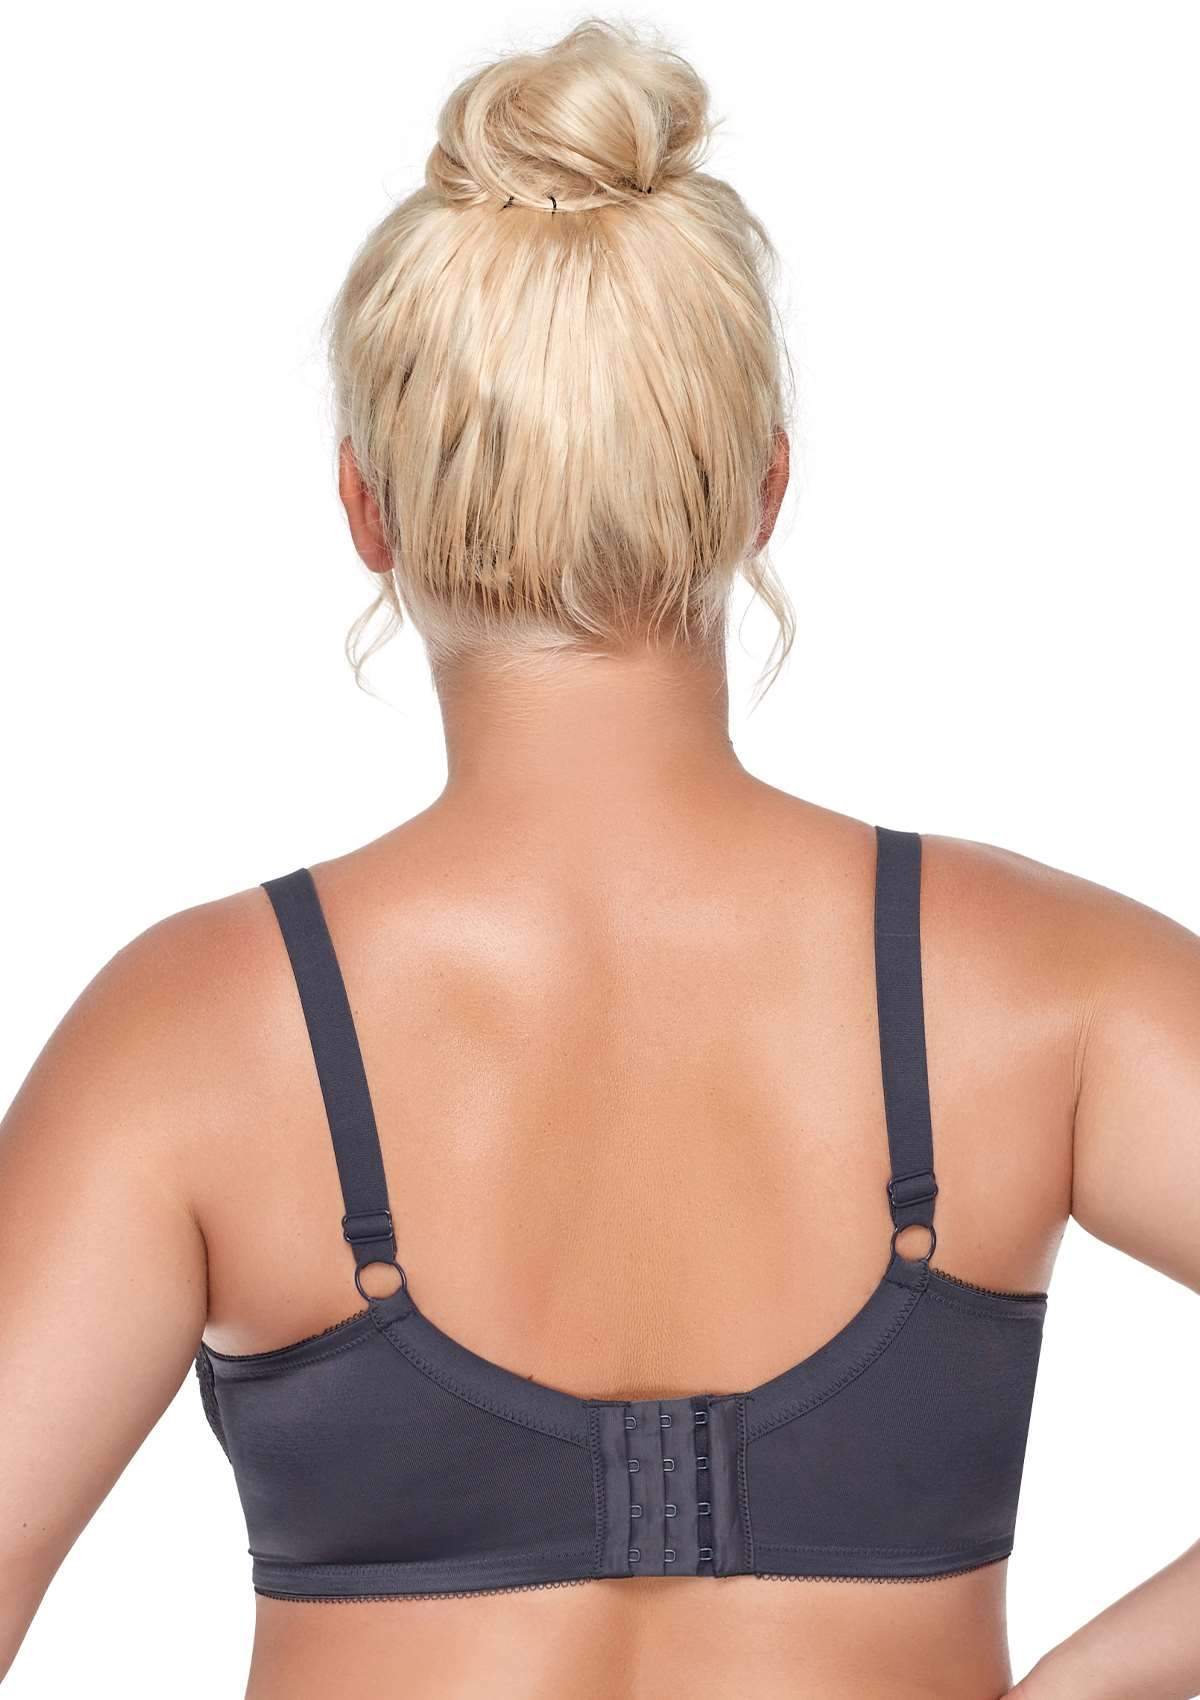 HSIA Enchante Matching Bra And Underwear Sets: Uplift Big Boobs Bra - Dark Gray / 36 / C